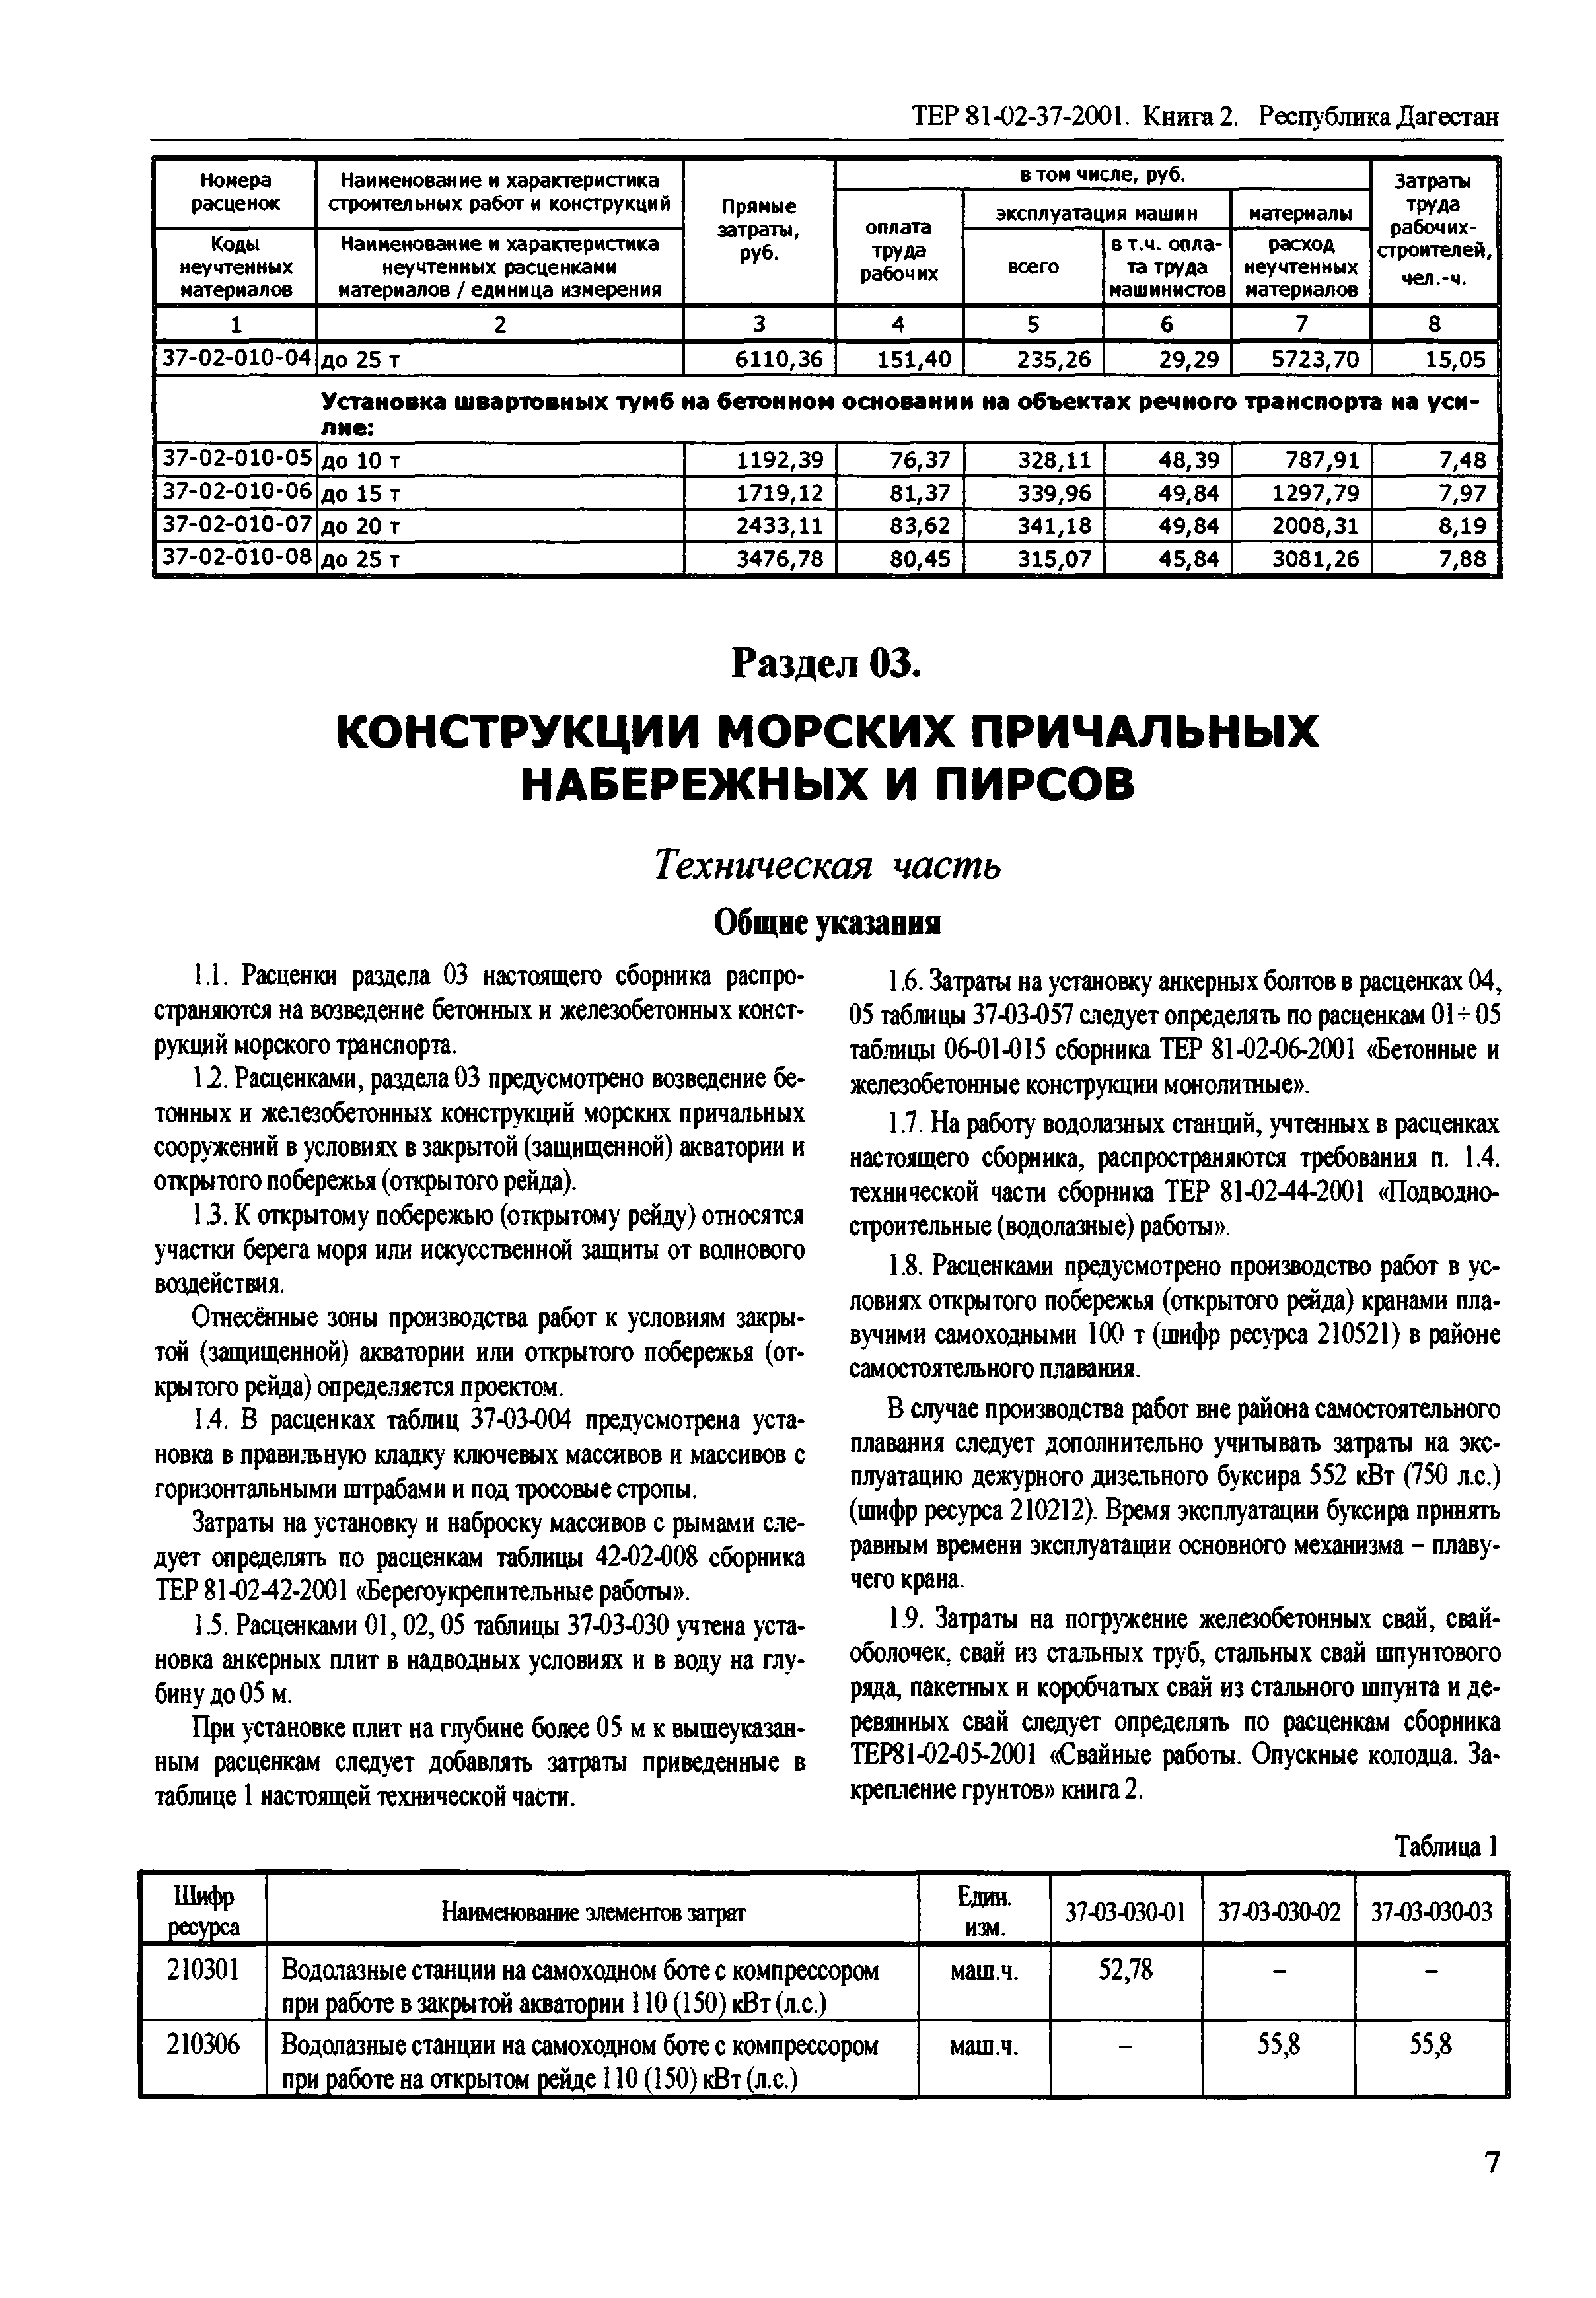 ТЕР Республика Дагестан 2001-37